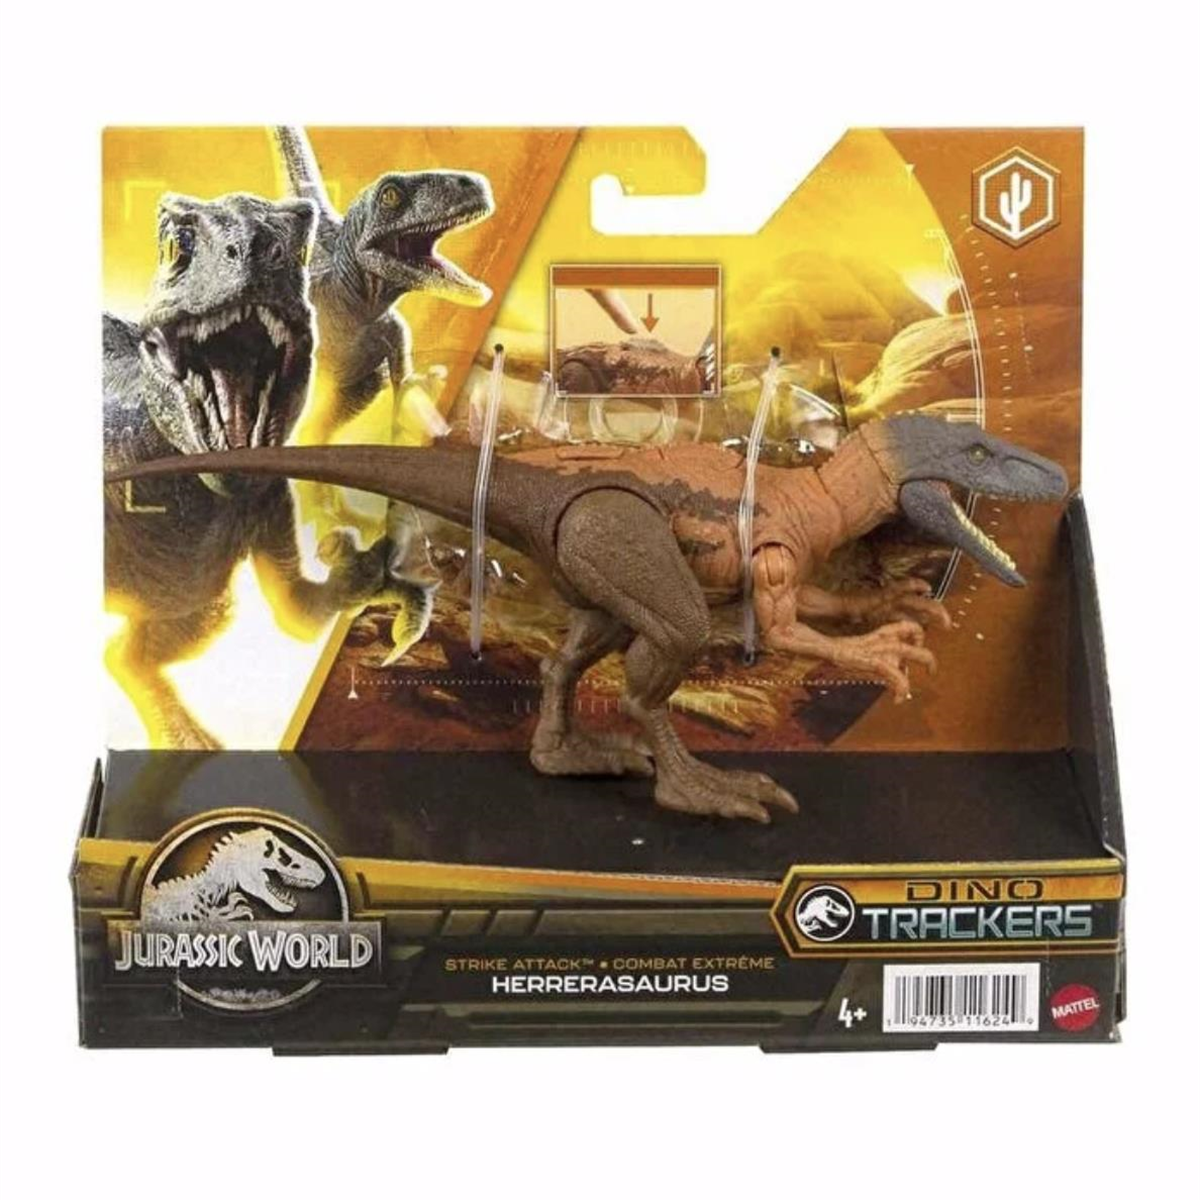 Jurassic World İz Sürücü Dinozor Figürleri HLN63-HLN64 | Toysall